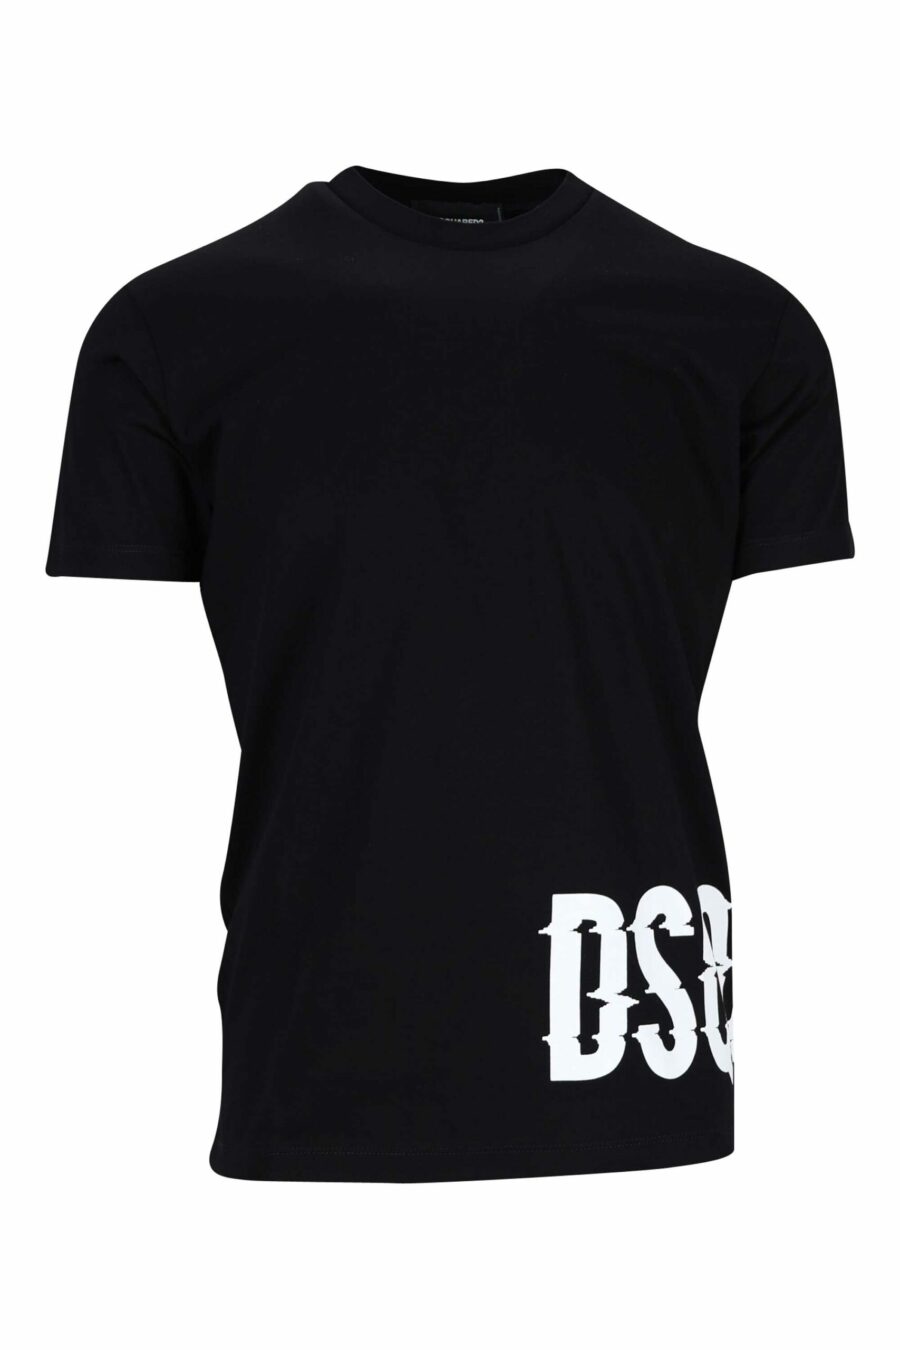 Schwarzes T-Shirt mit schwarzem verzerrtem Maxilogue-Bass - 8054148332808 skaliert